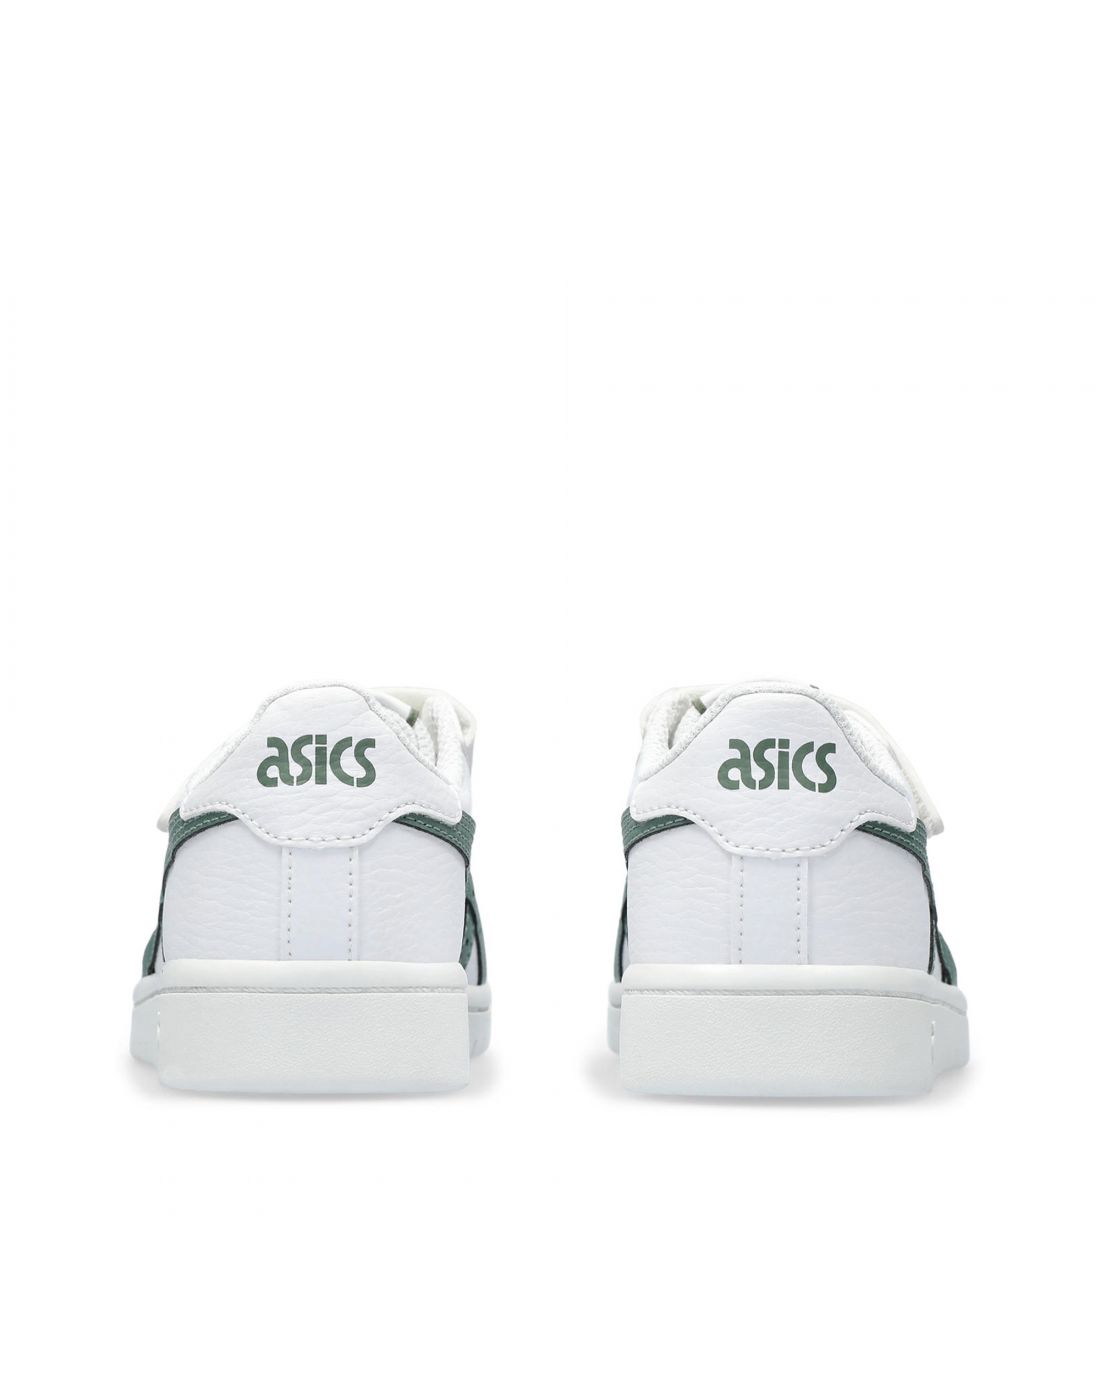 Asics Japan S Kids Sneakers